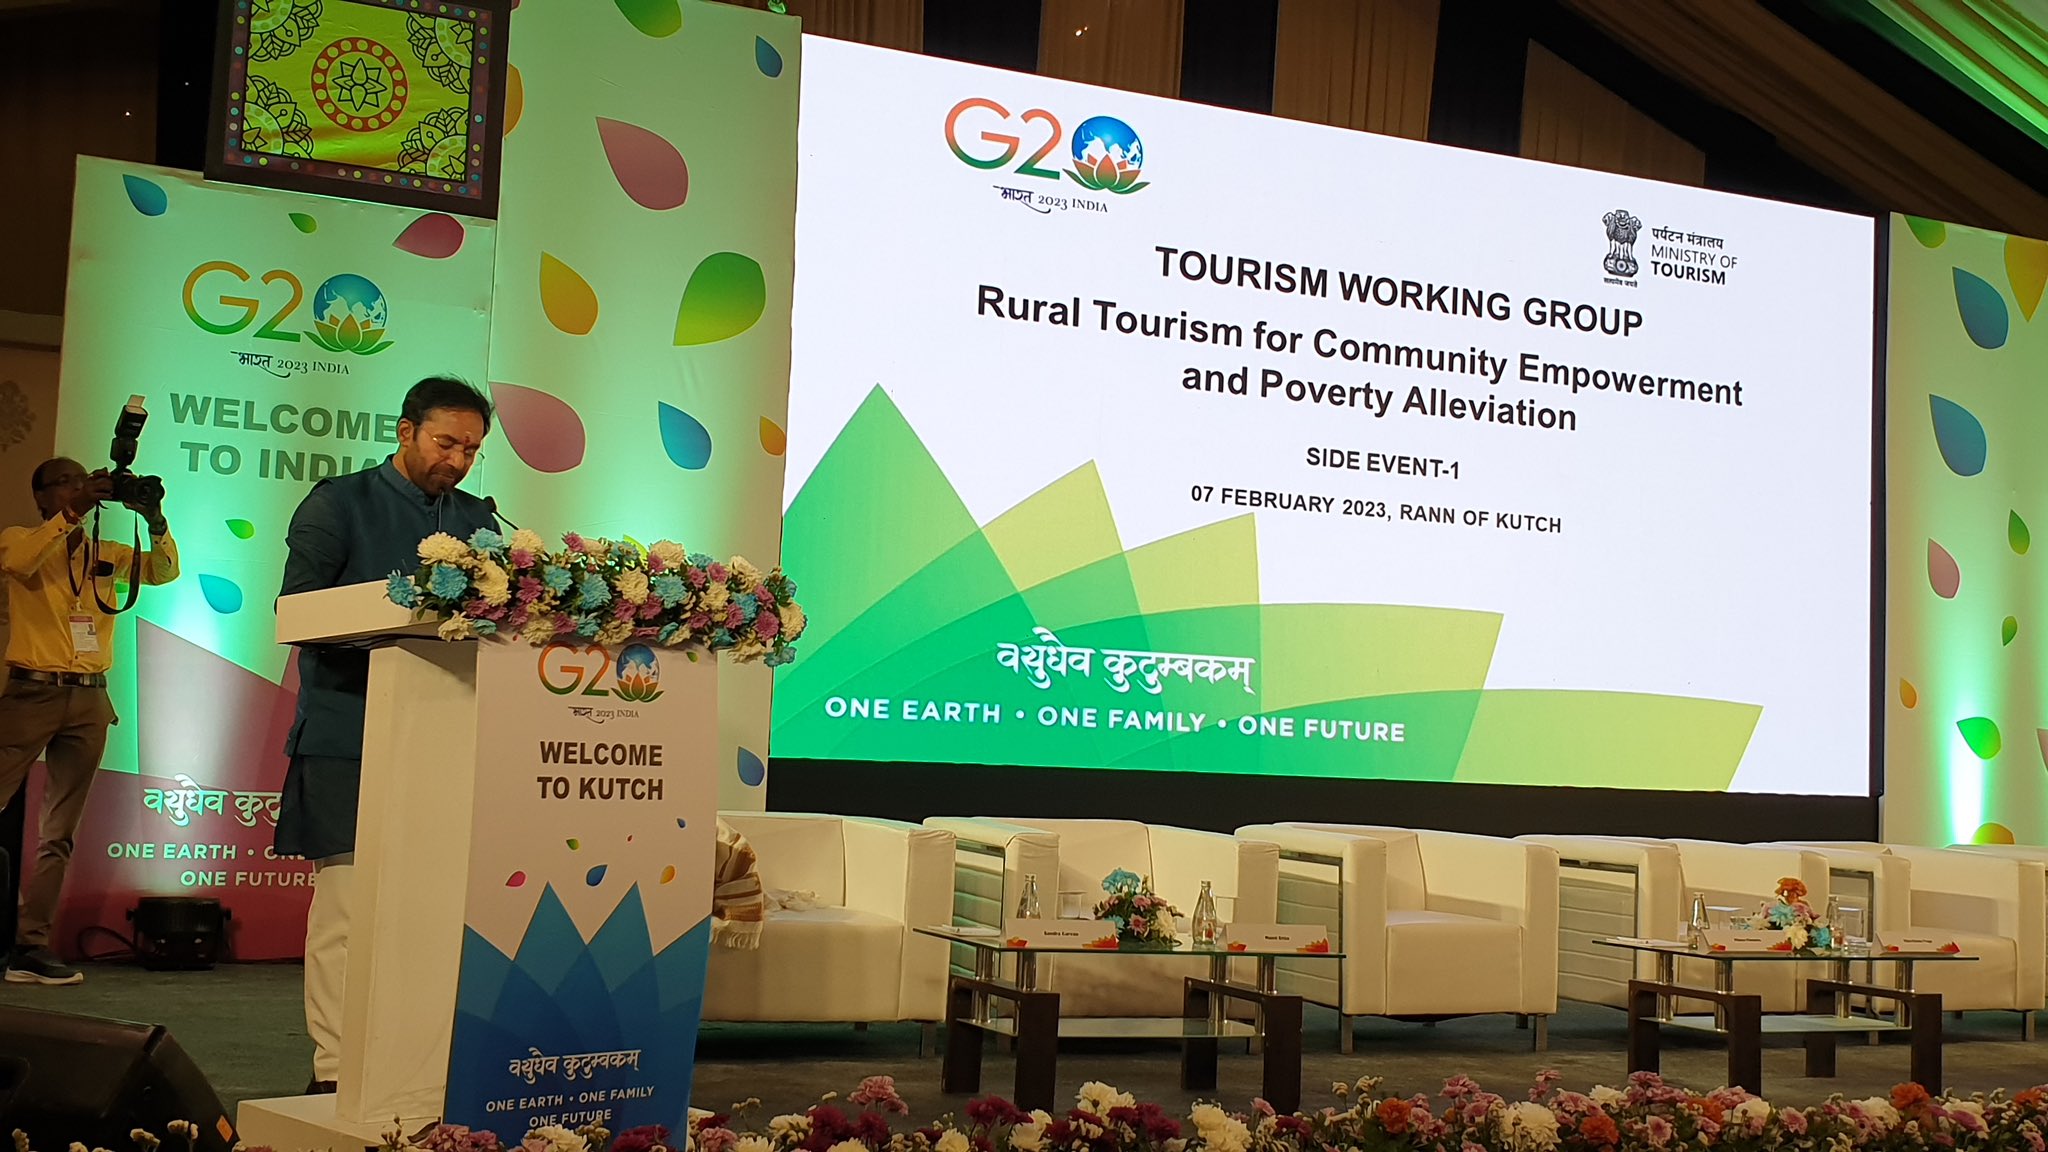 G20 addresses tourism for rural development